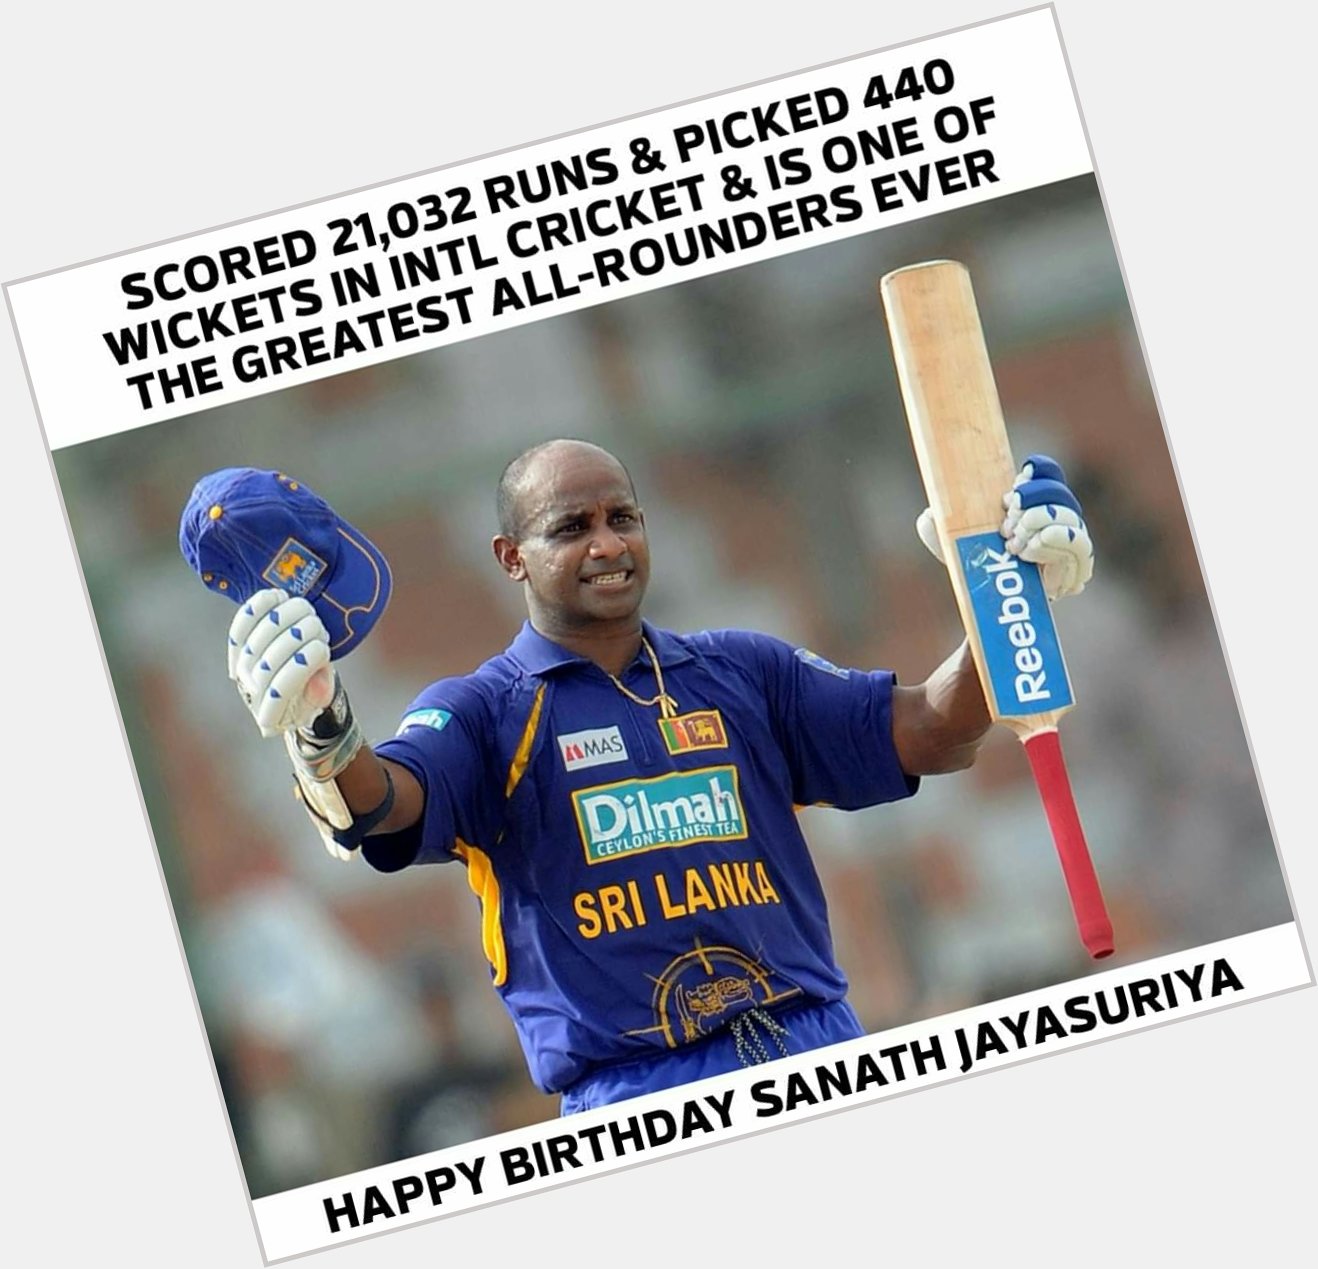 Join us in wishing Sanath Jayasuriya, a very happy birthday 